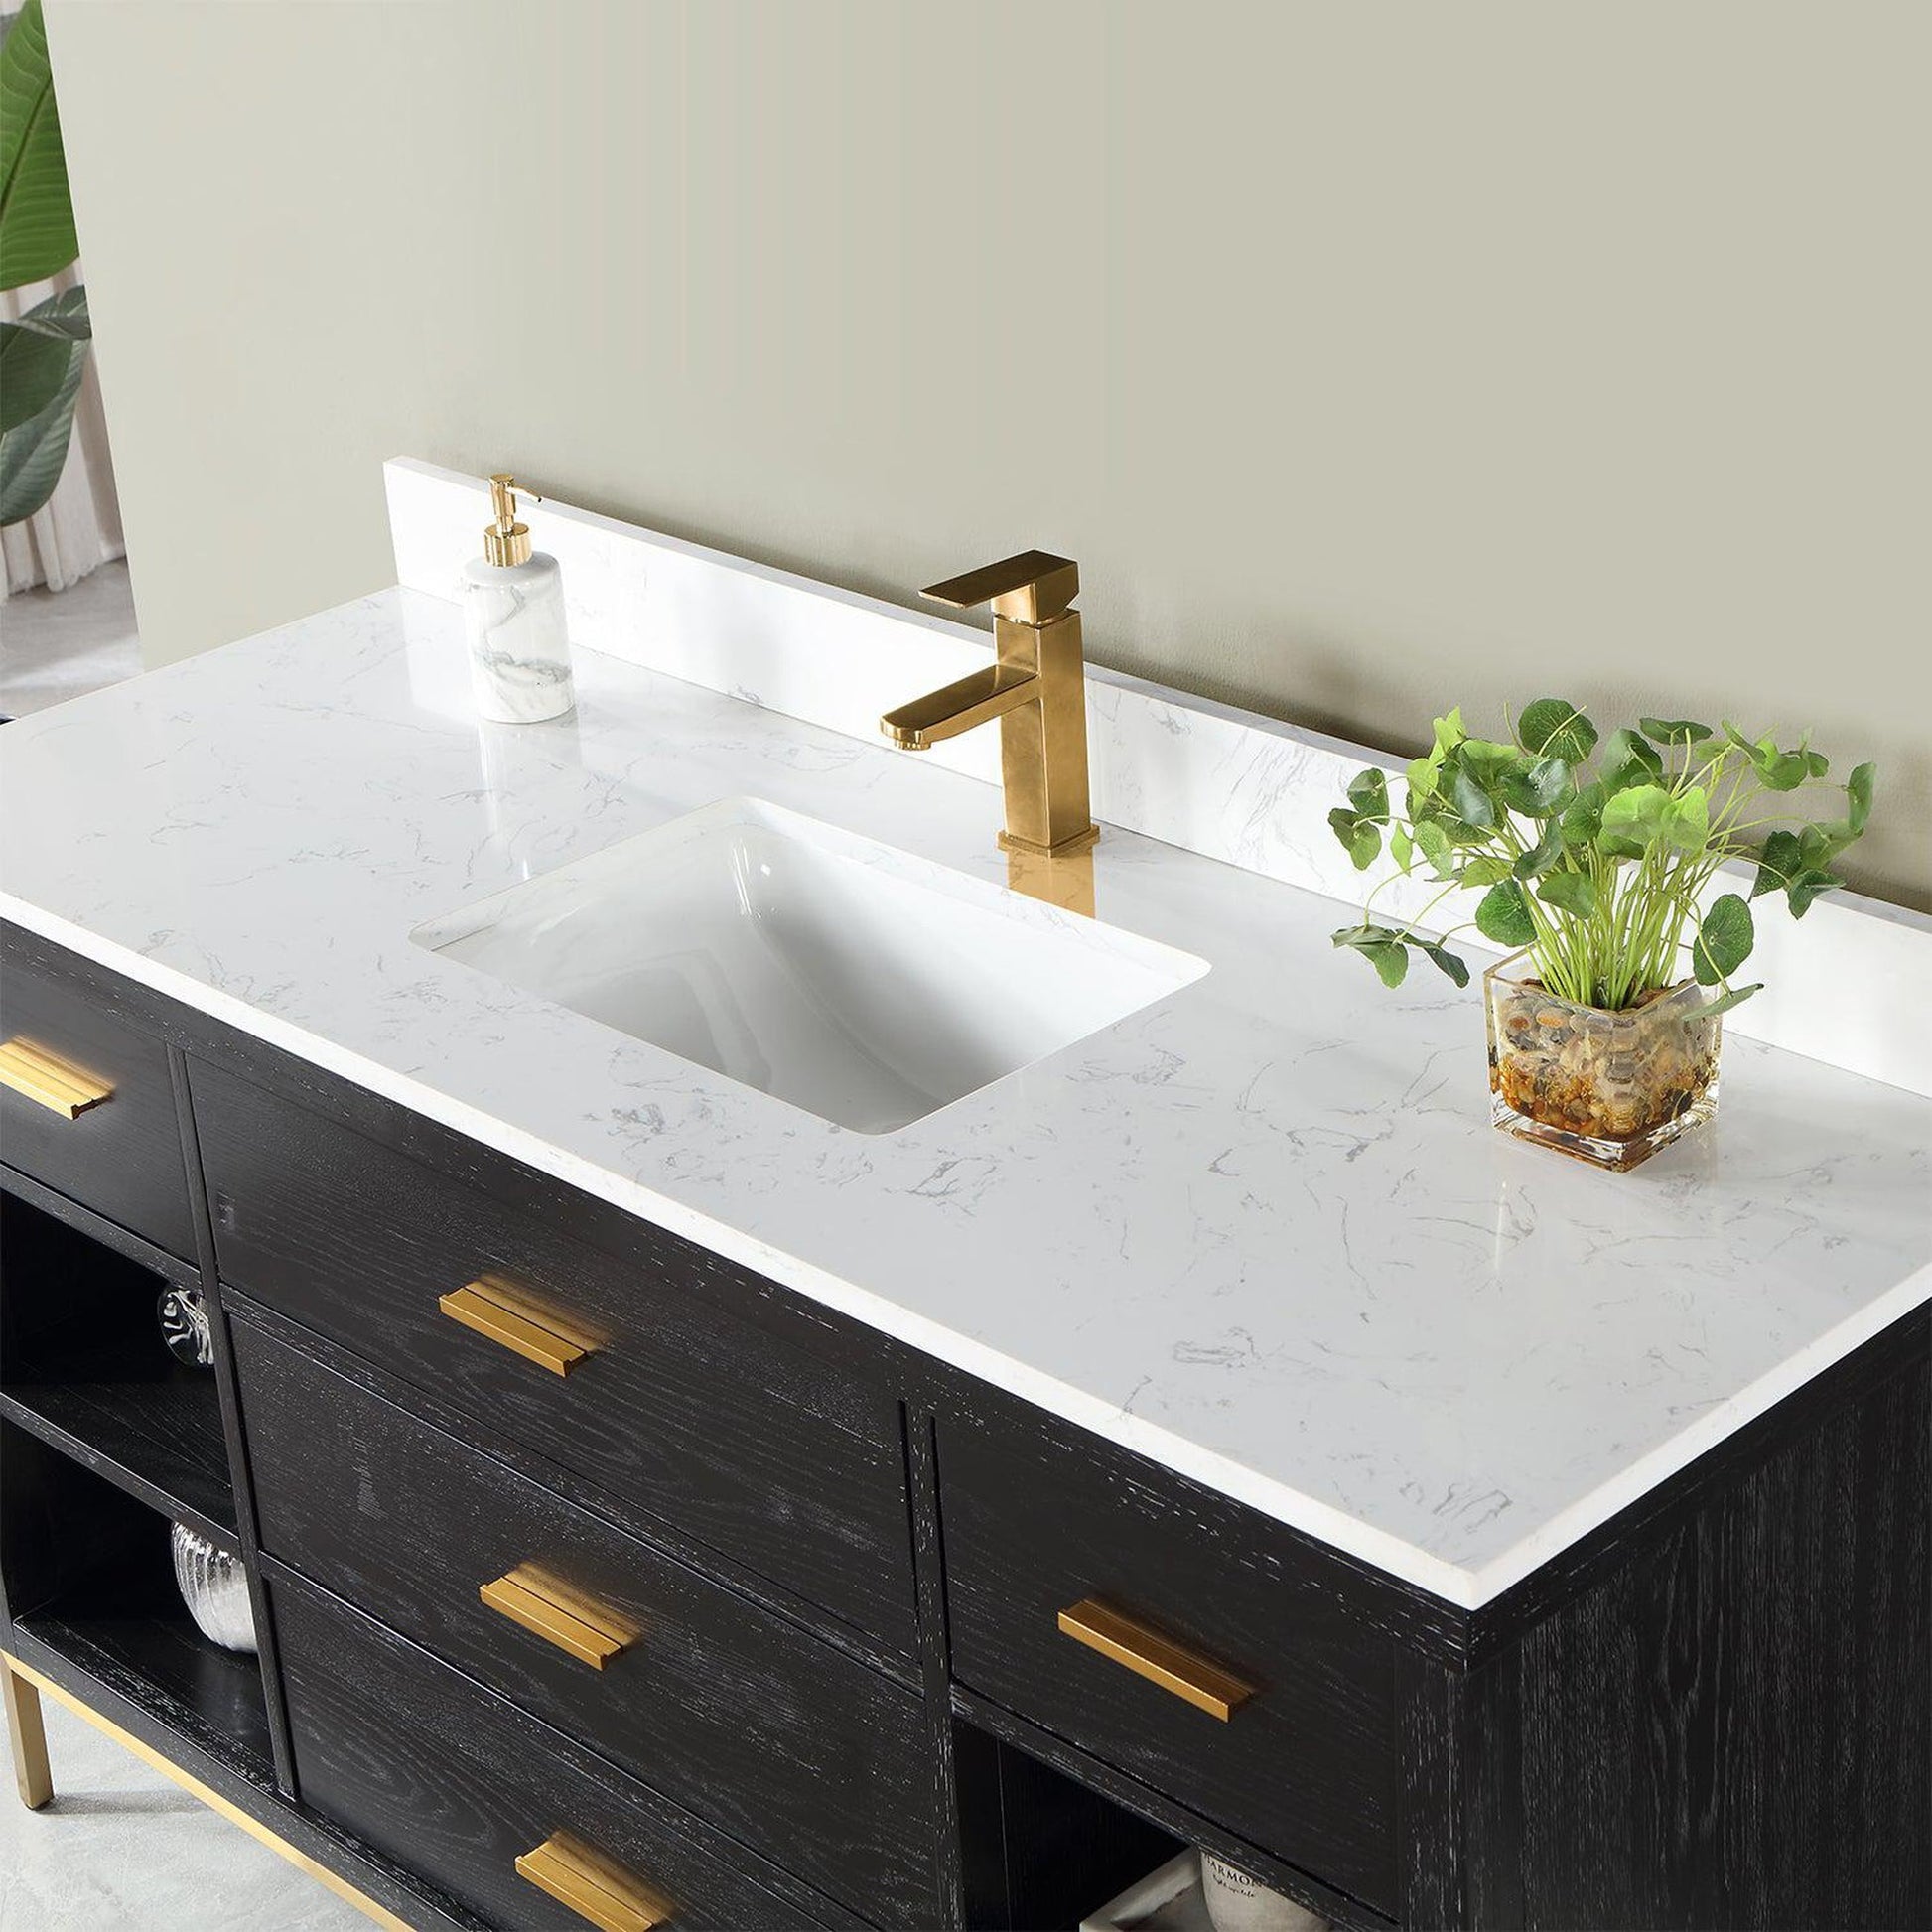 Altair Kesia 60" Black Oak Freestanding Single Bathroom Vanity Set With Stylish Aosta White Composite Stone Top, Rectangular Undermount Ceramic Sink, Overflow, and Backsplash